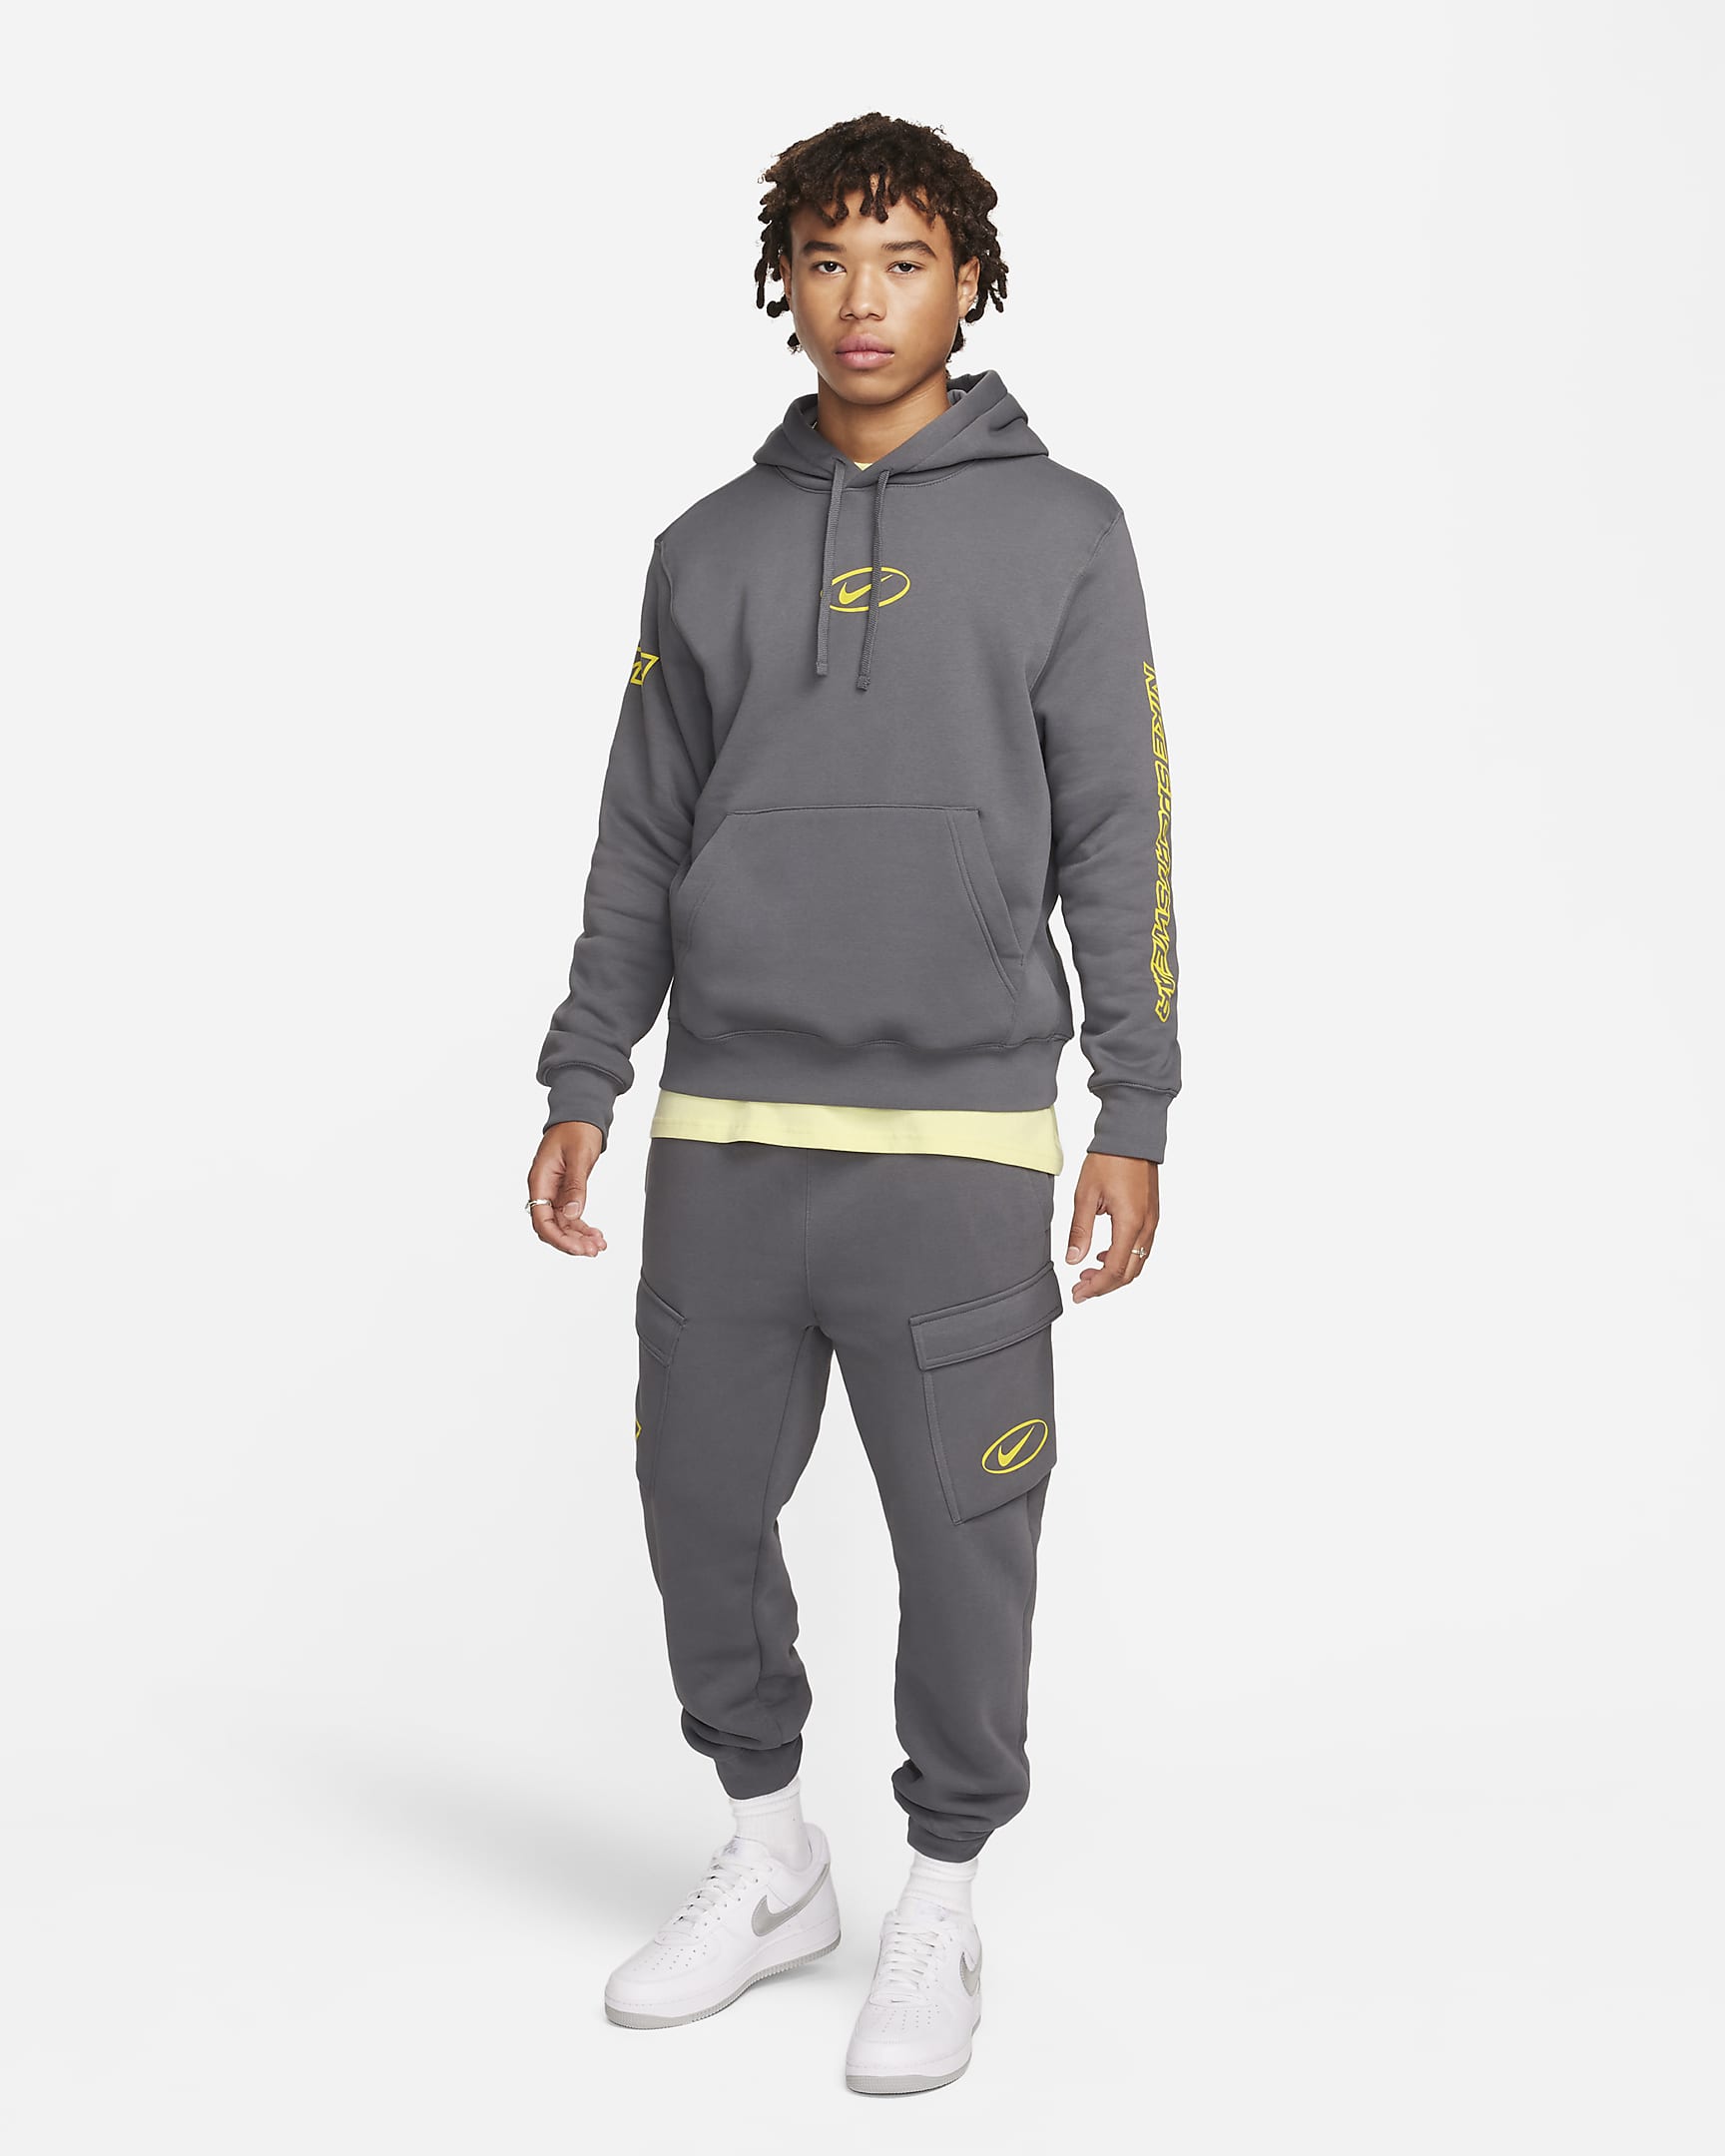 Nike Sportswear Men's Pullover Hoodie. Nike UK